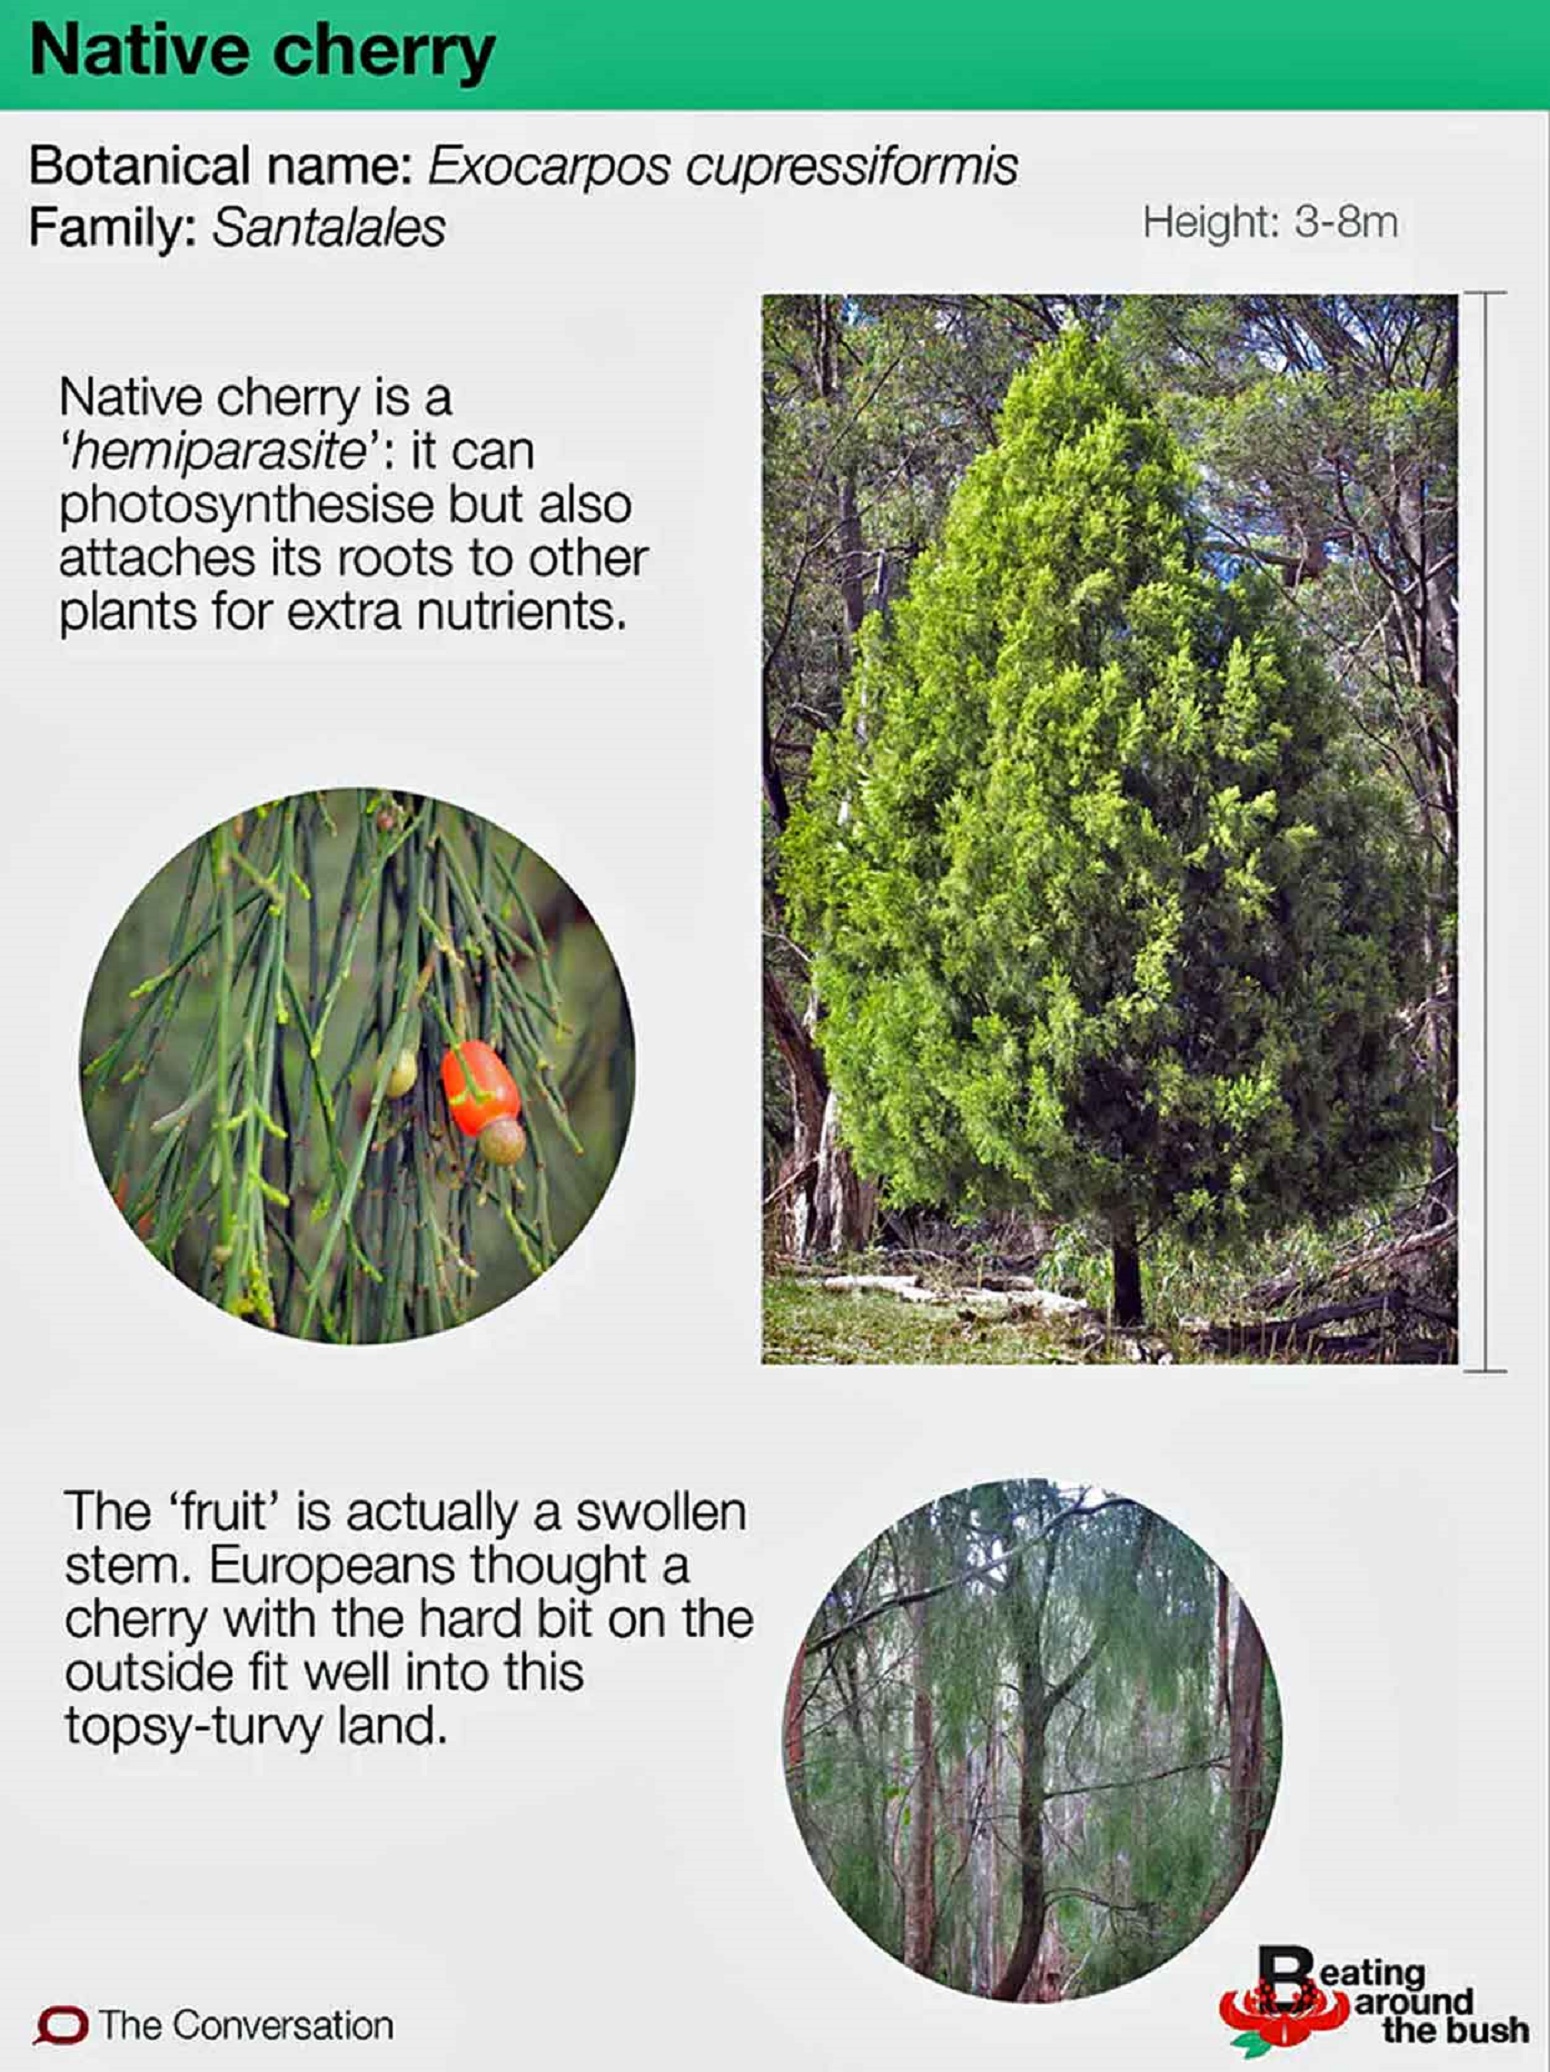 Native Cherry Description